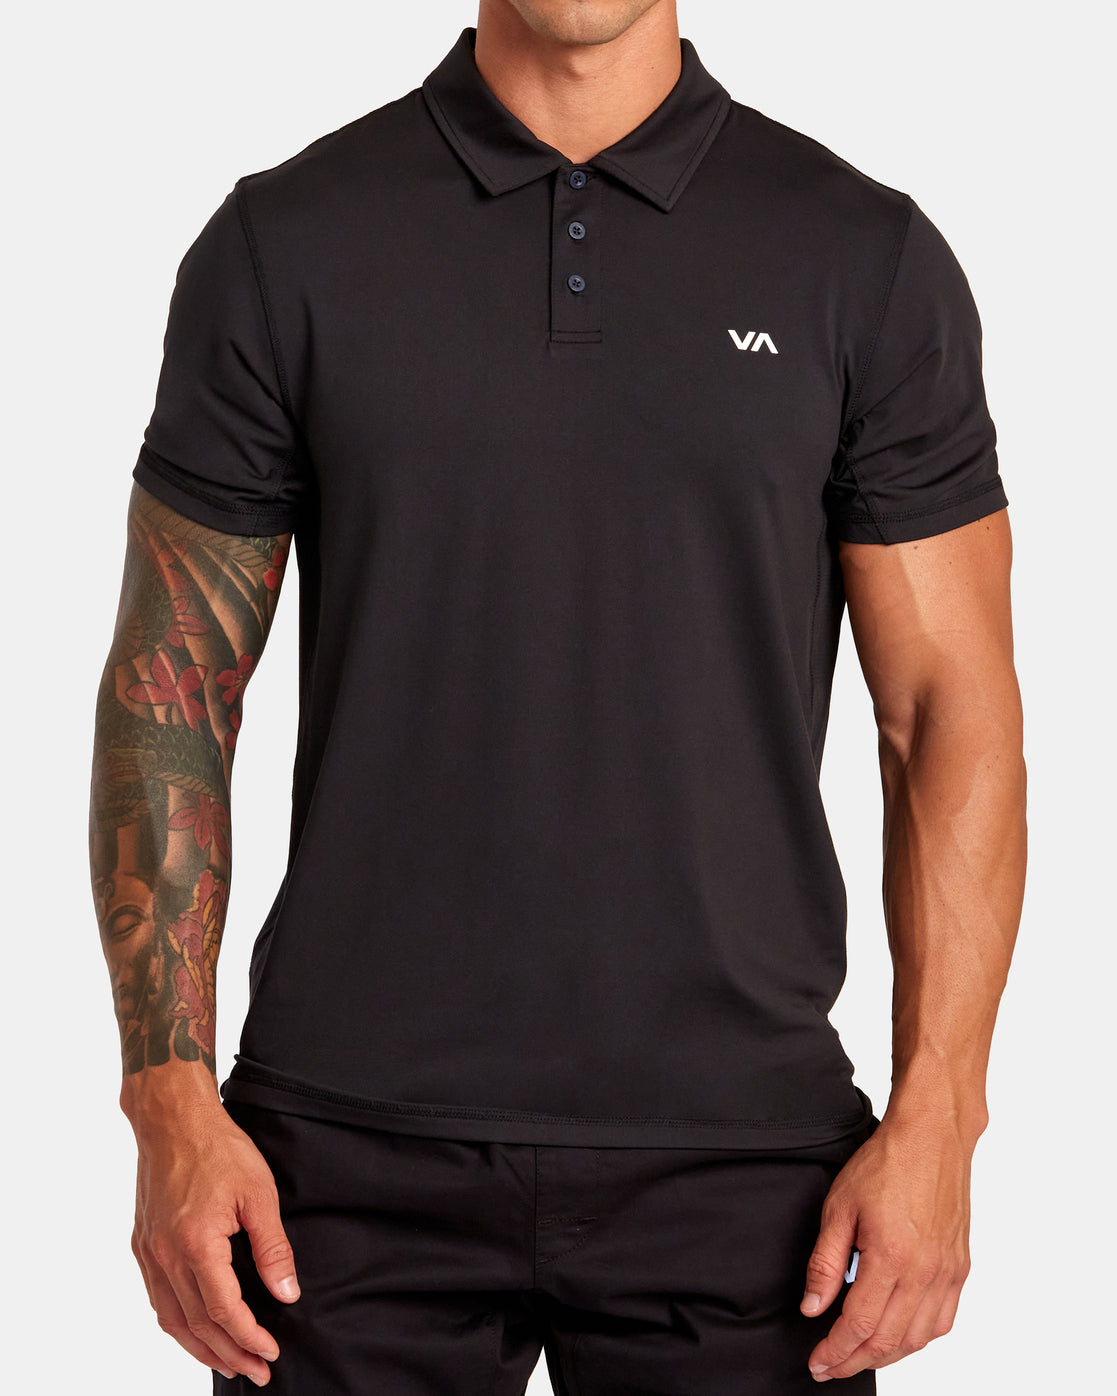 VA Sport Vent Technical Polo Shirt - Black